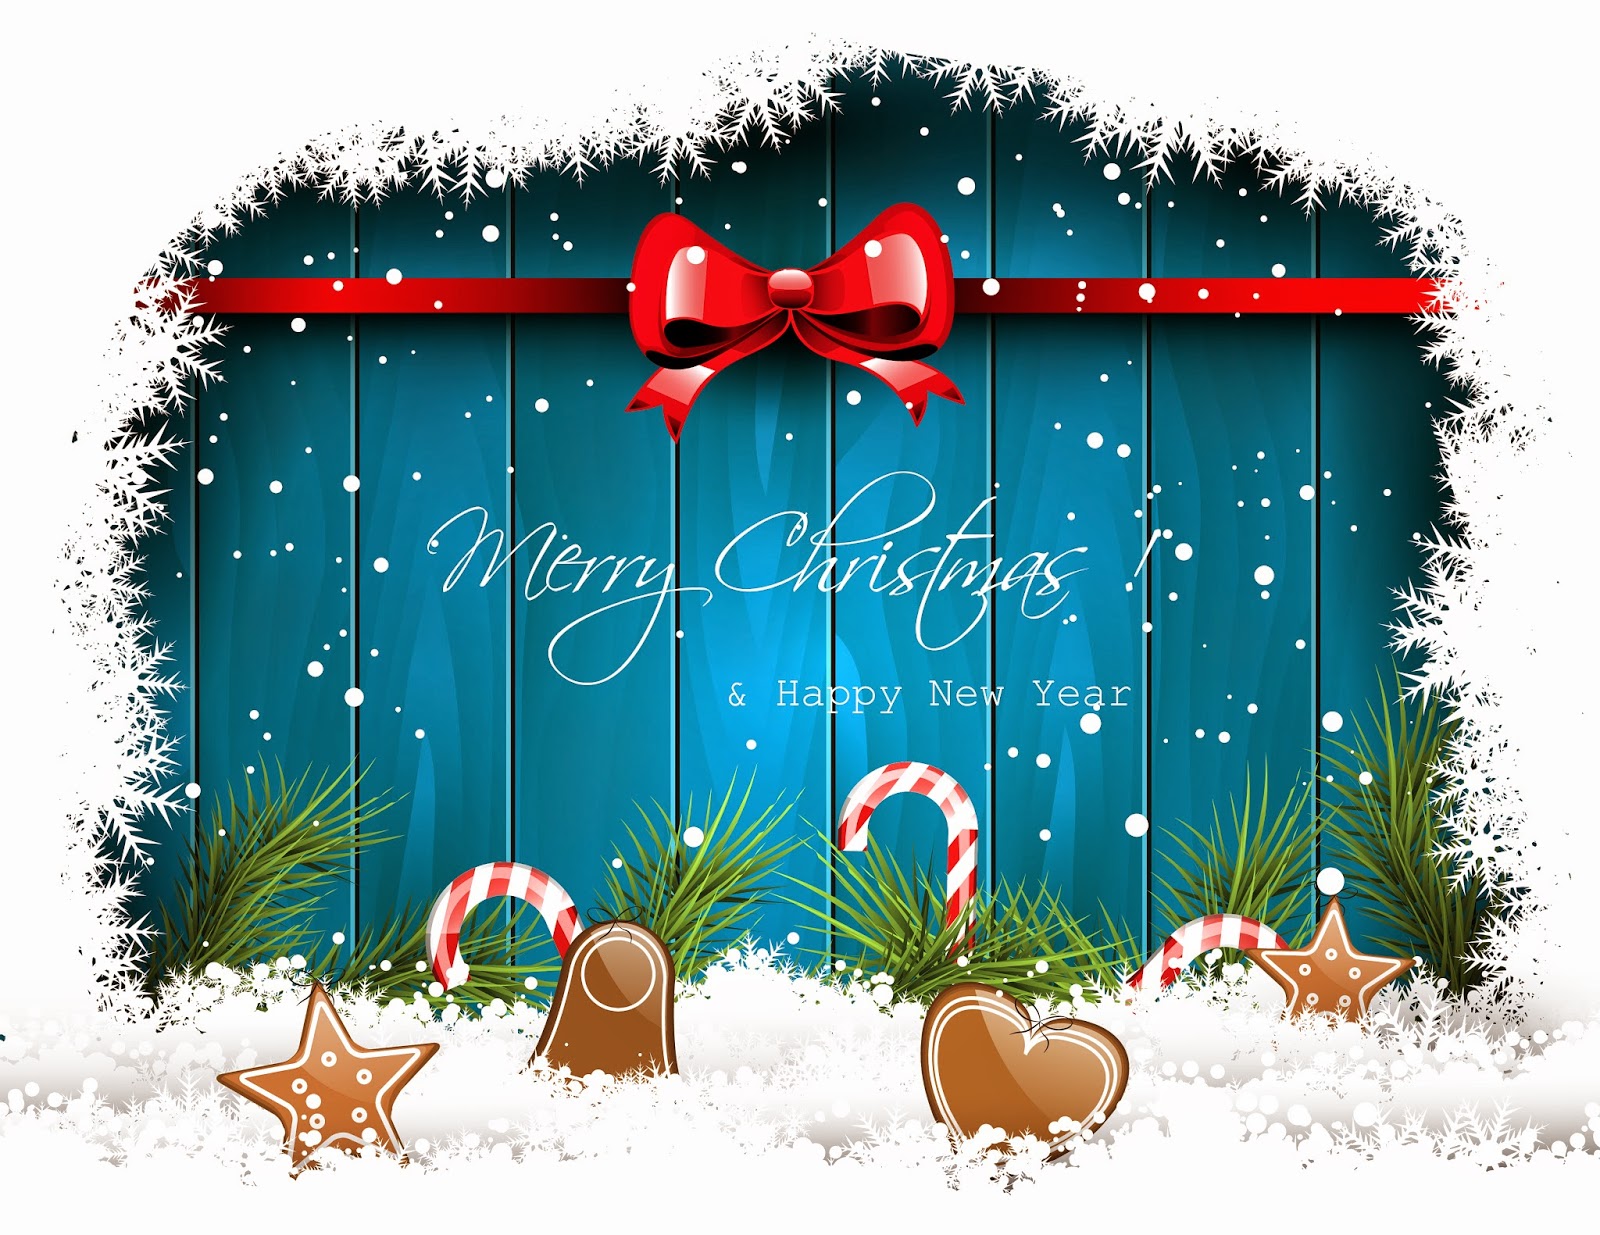 wish-merry-Christmas-happy-new-year-winter-theme-snow-greeting-card-image.jpg